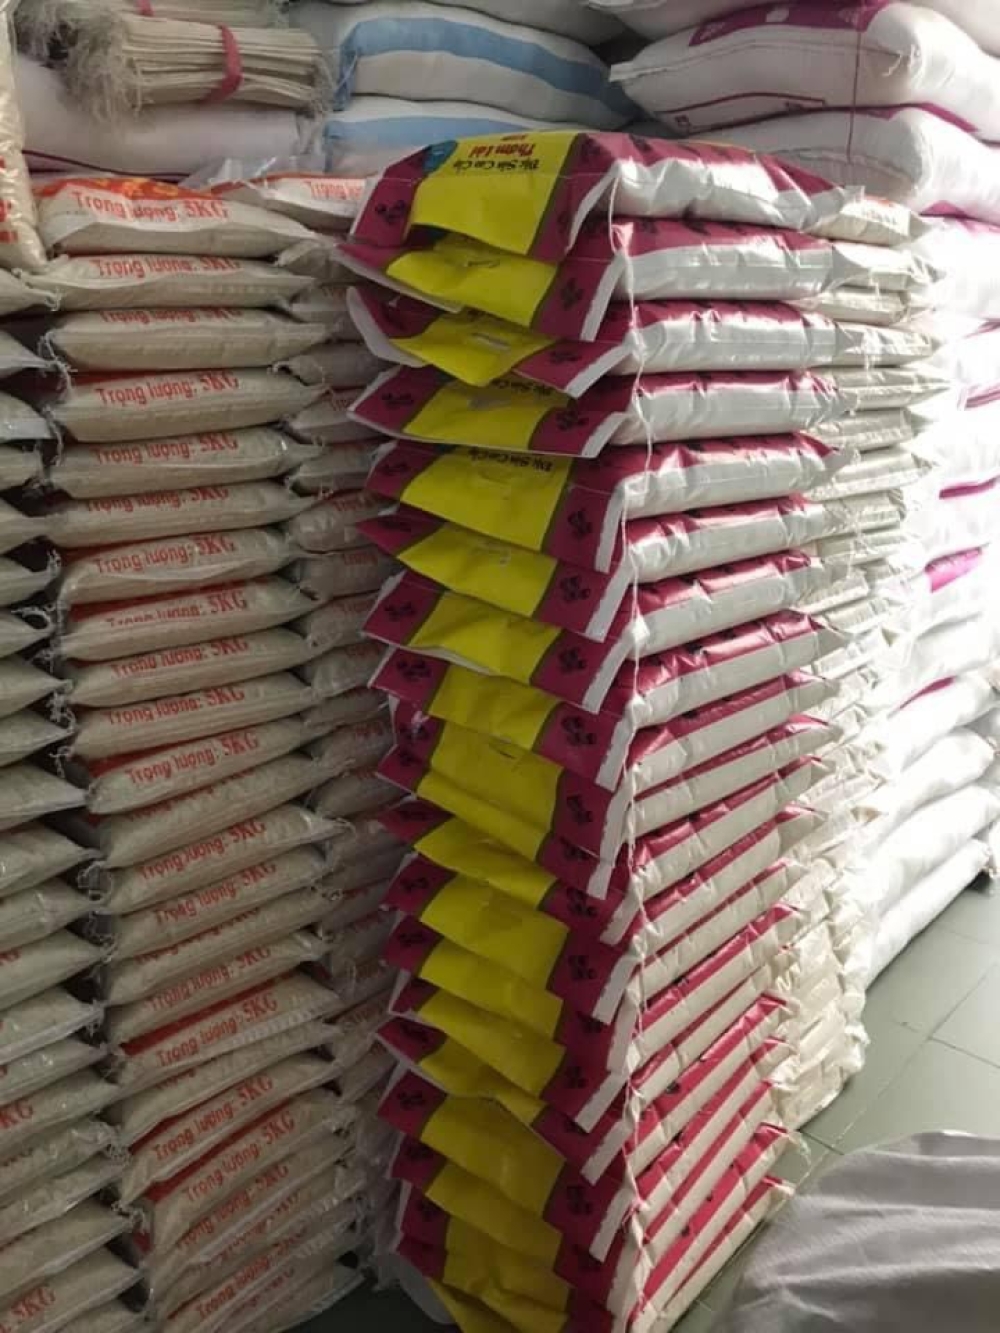  Nhà cung cấp gạo 